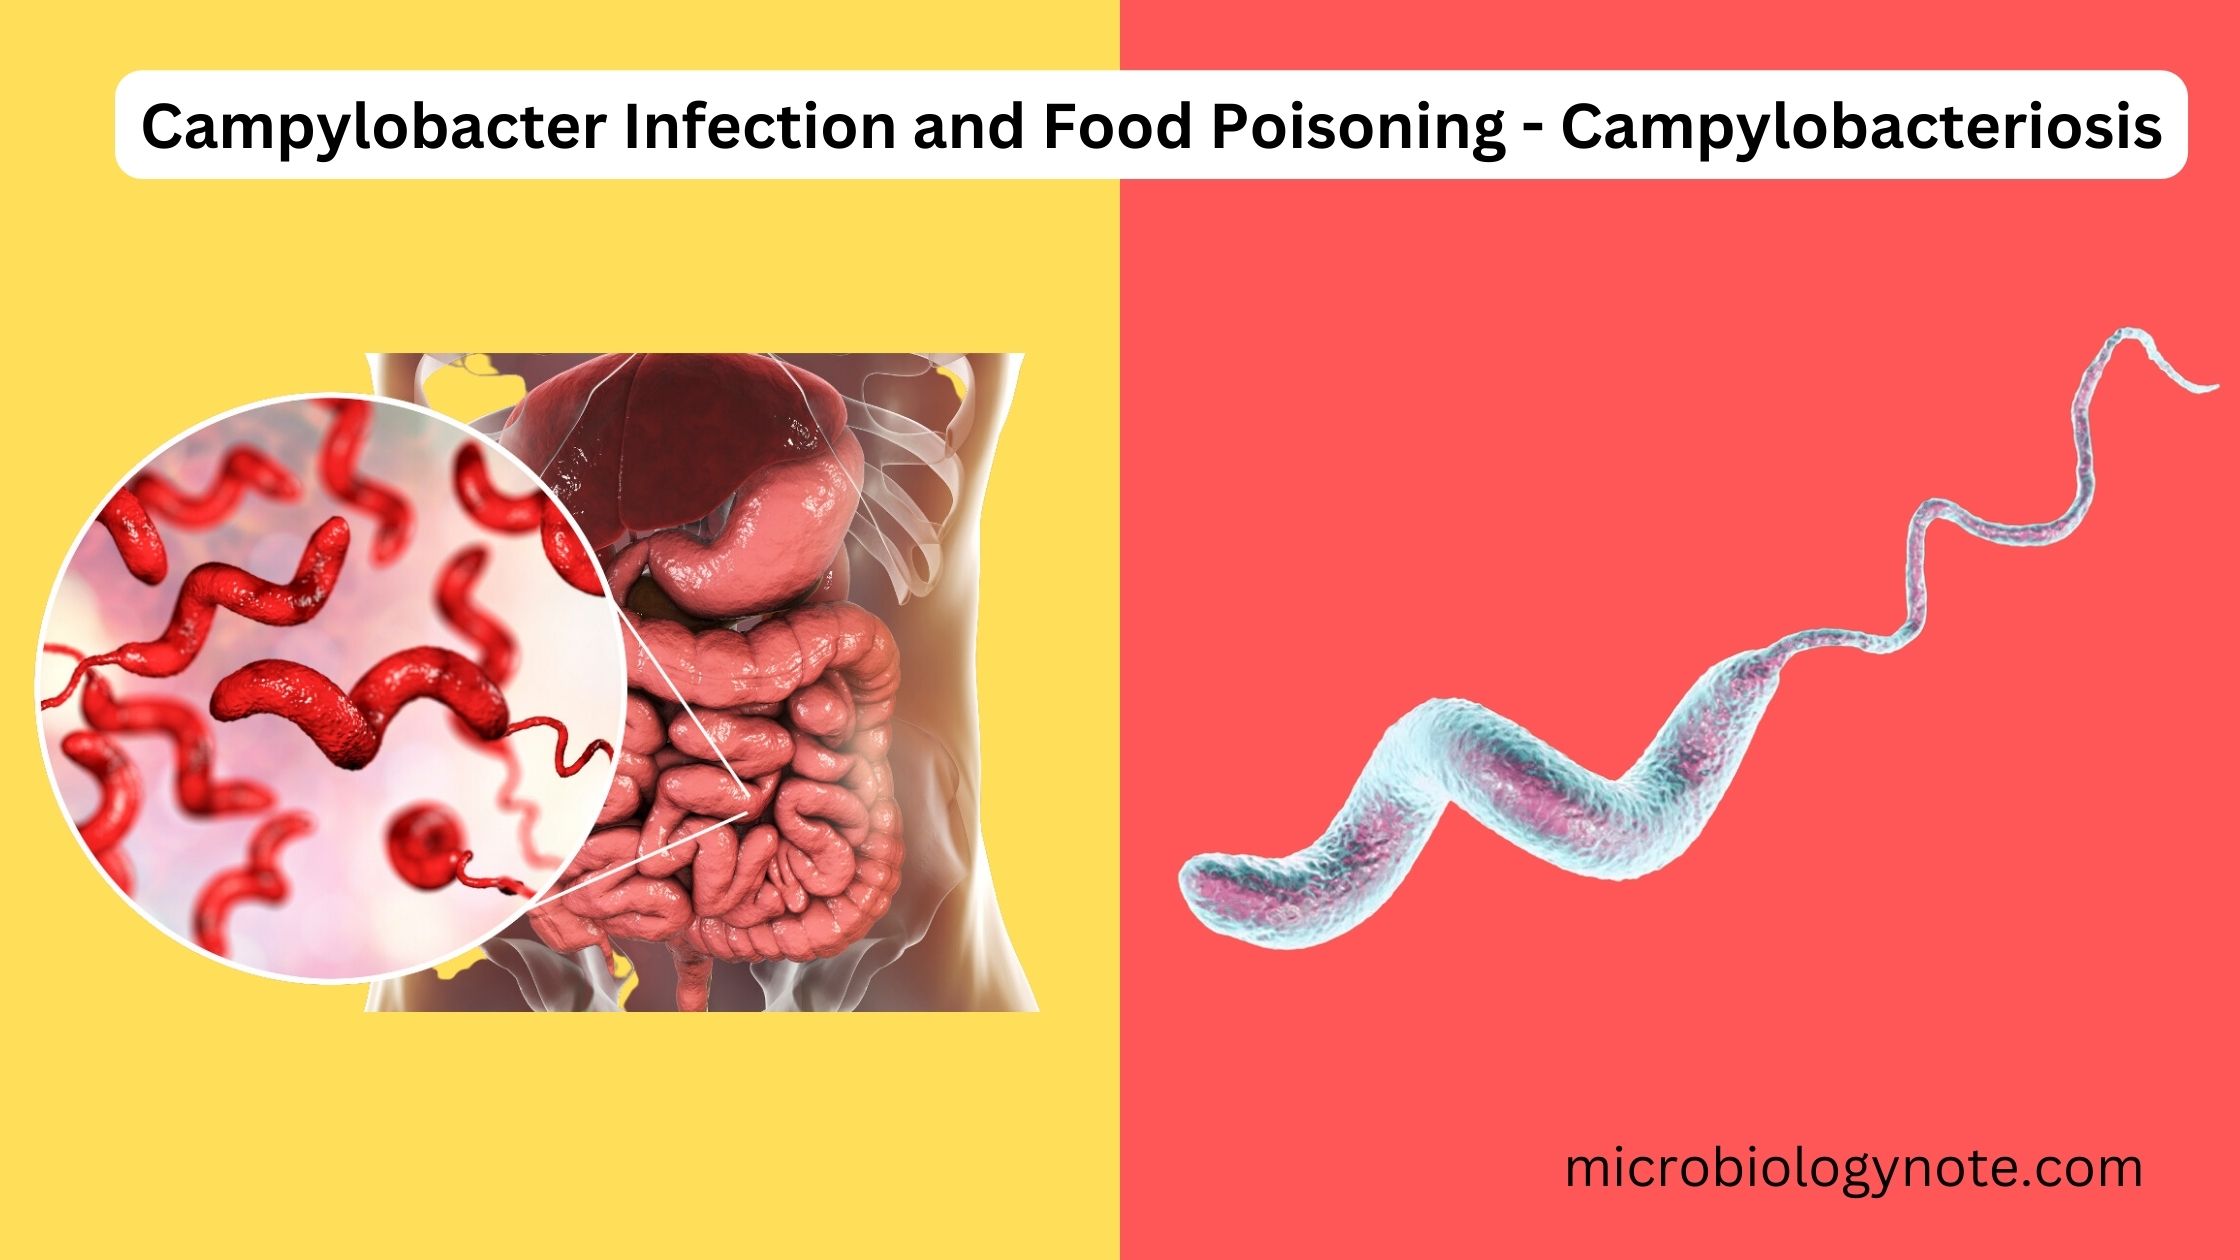 Campylobacter Infection and Food Poisoning - Campylobacteriosis